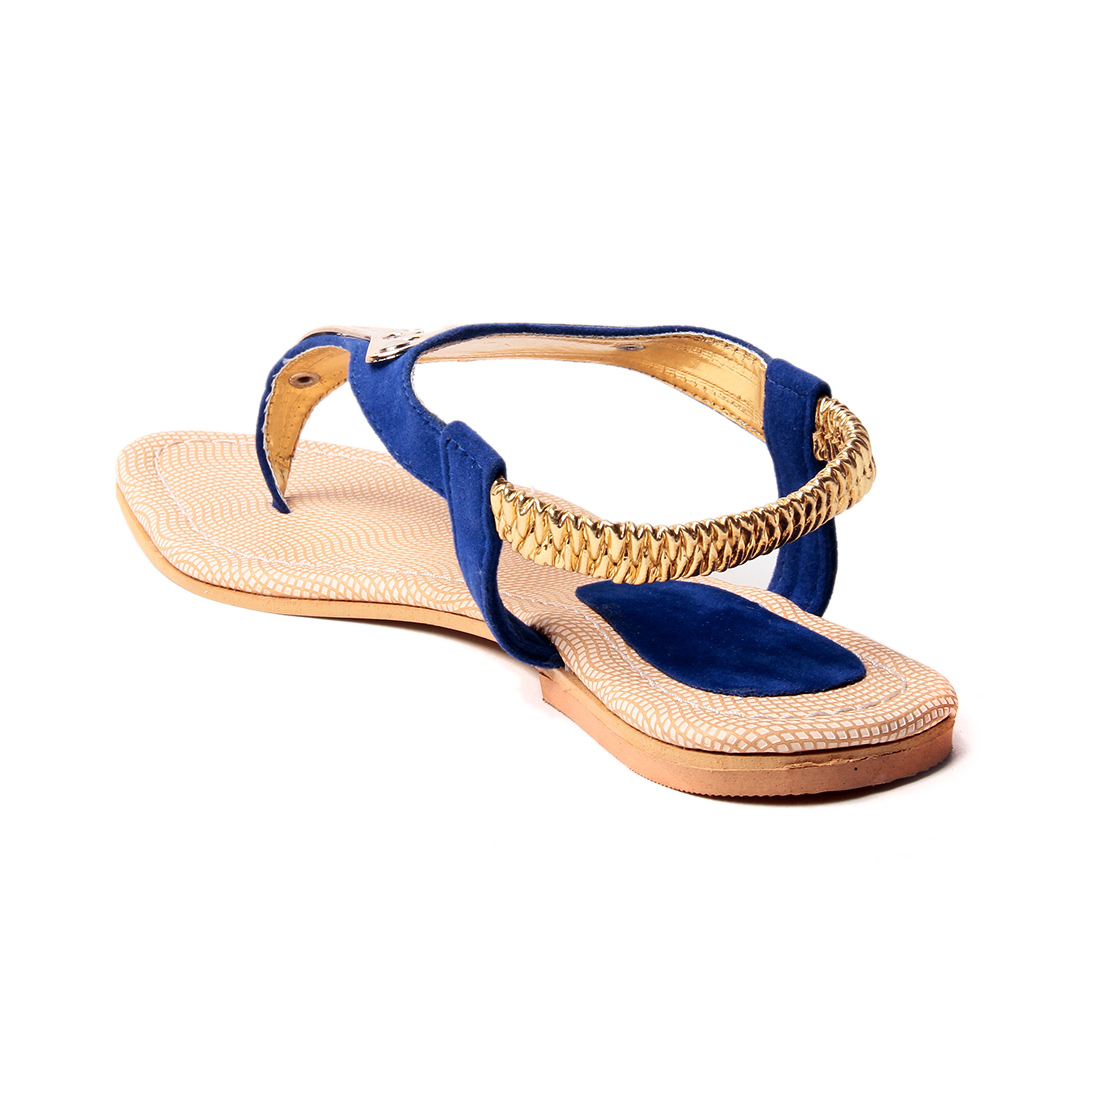 Buy Royal Footwears Blue Women Sandals Online @ ₹449 from ShopClues